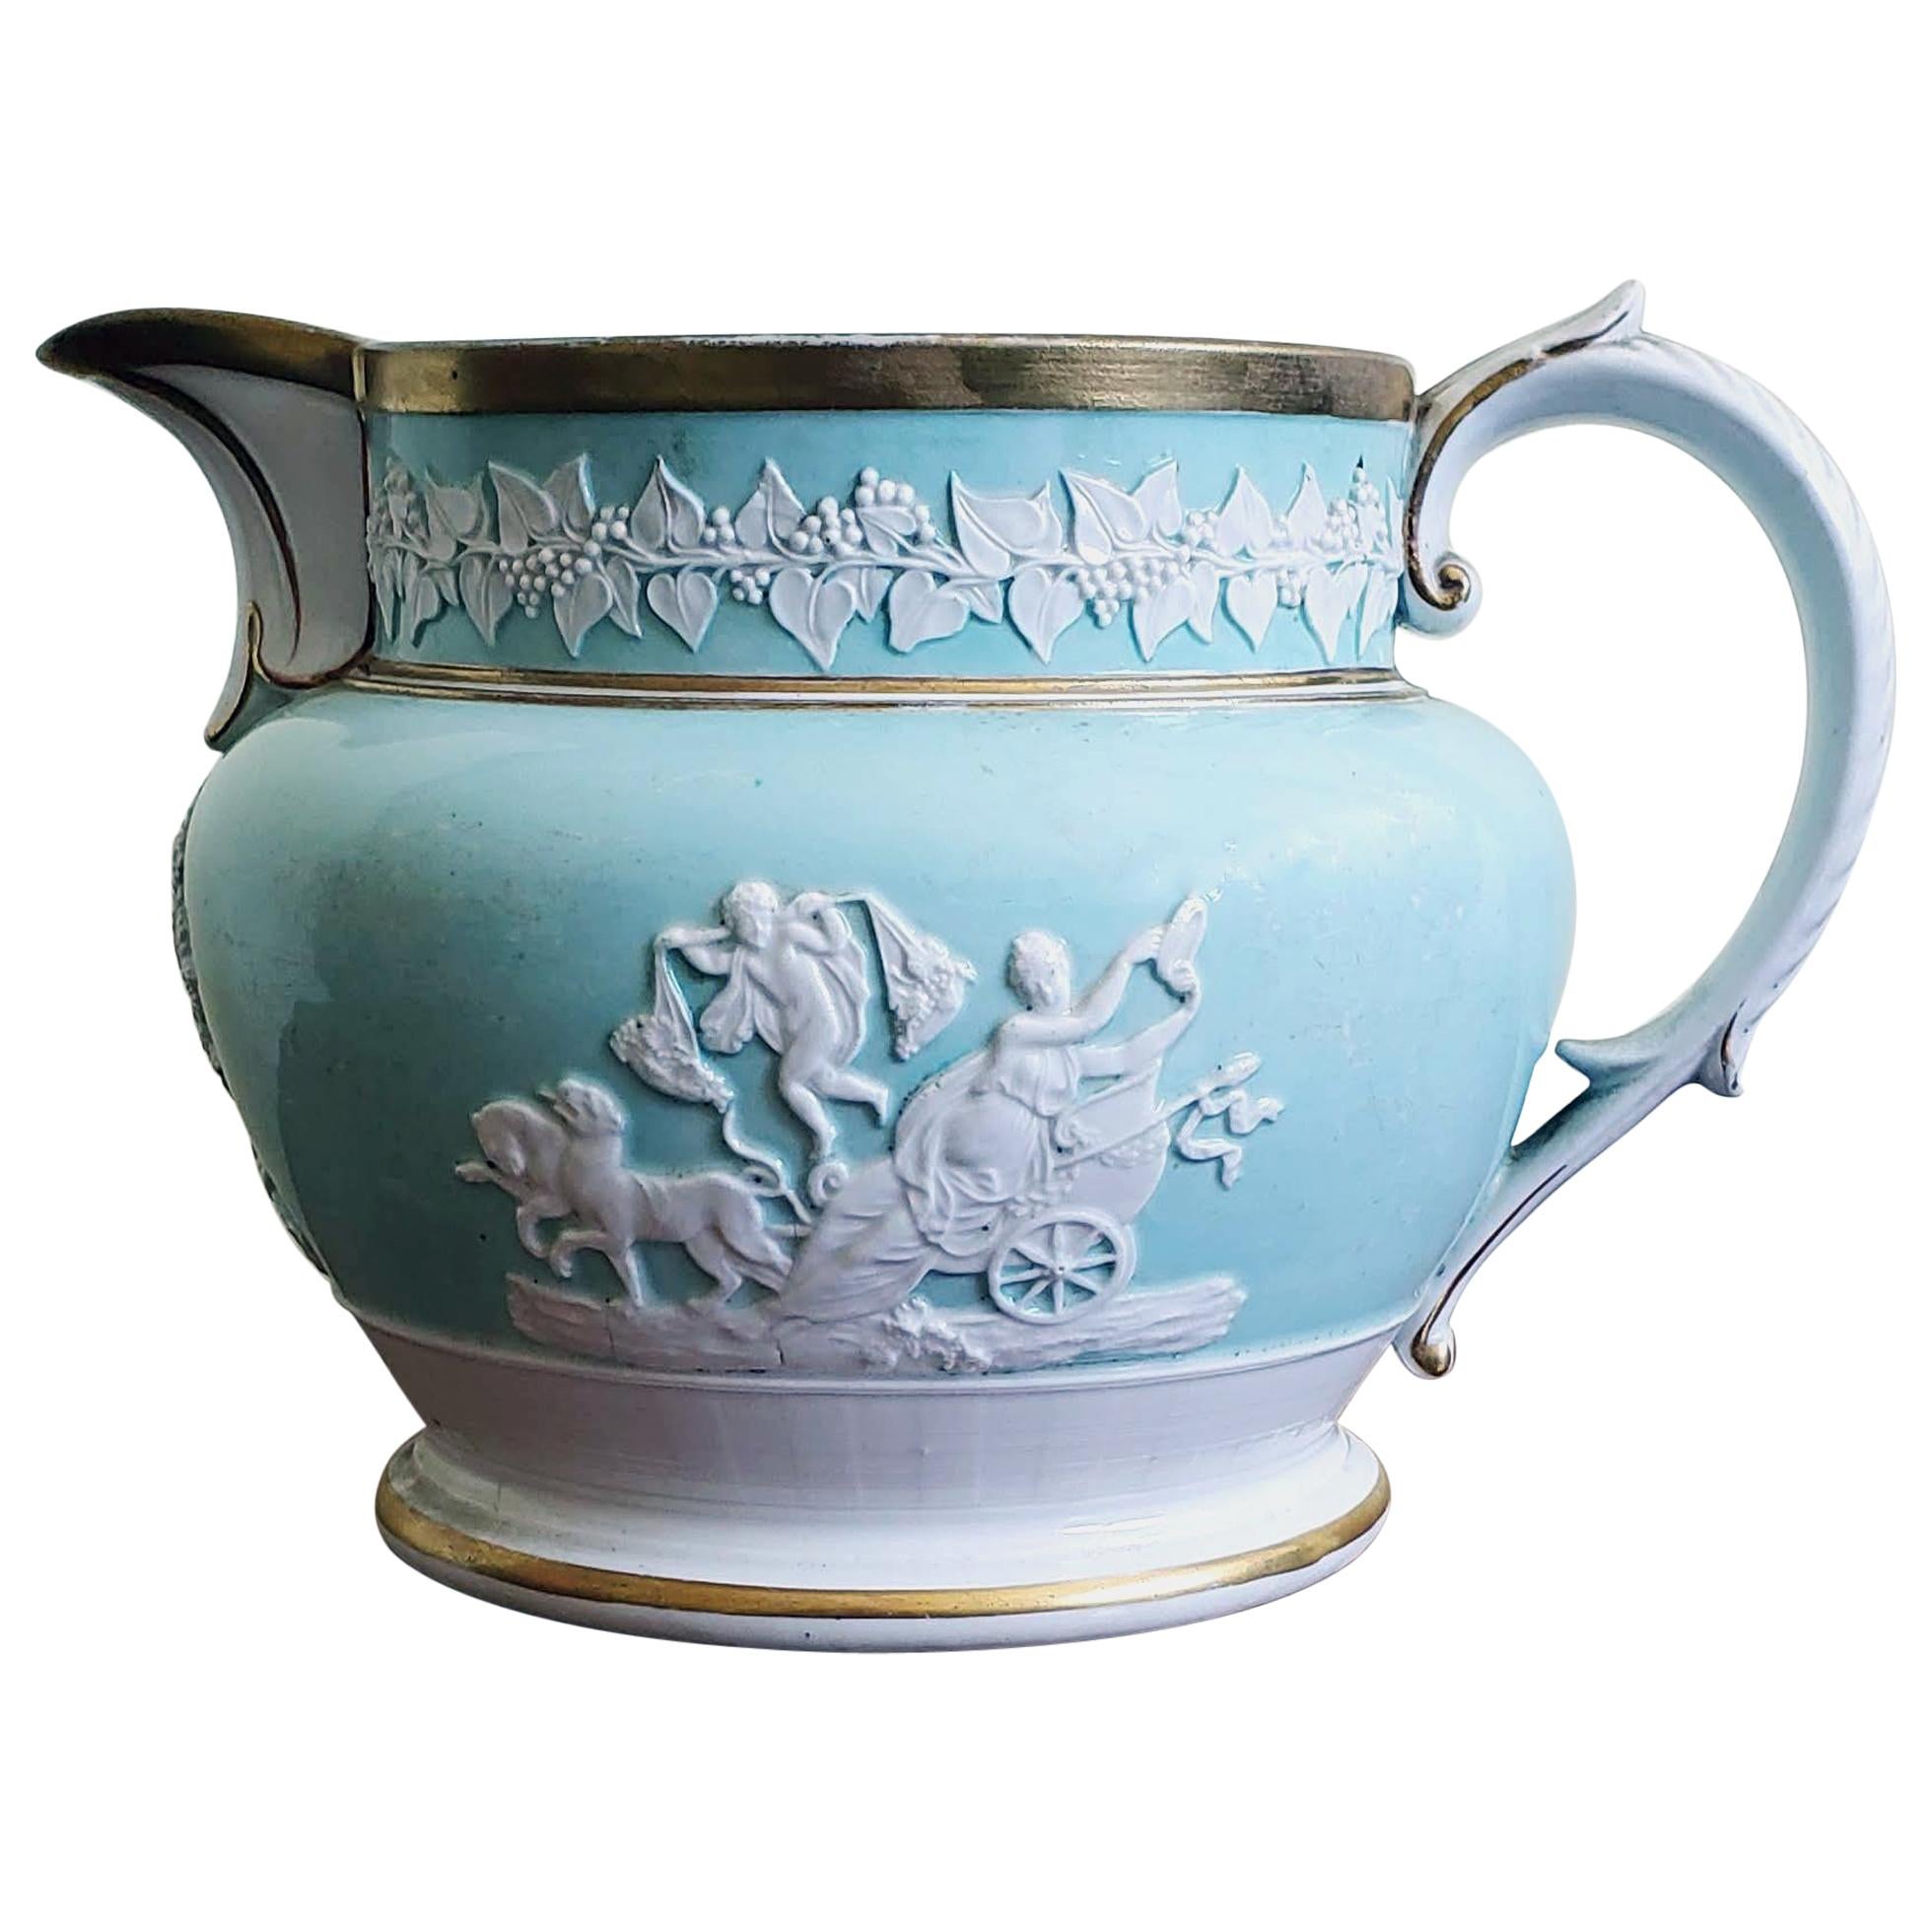 Ridgway Porcelain Sprigged Large Jug with Light Blue Ground, circa 1820